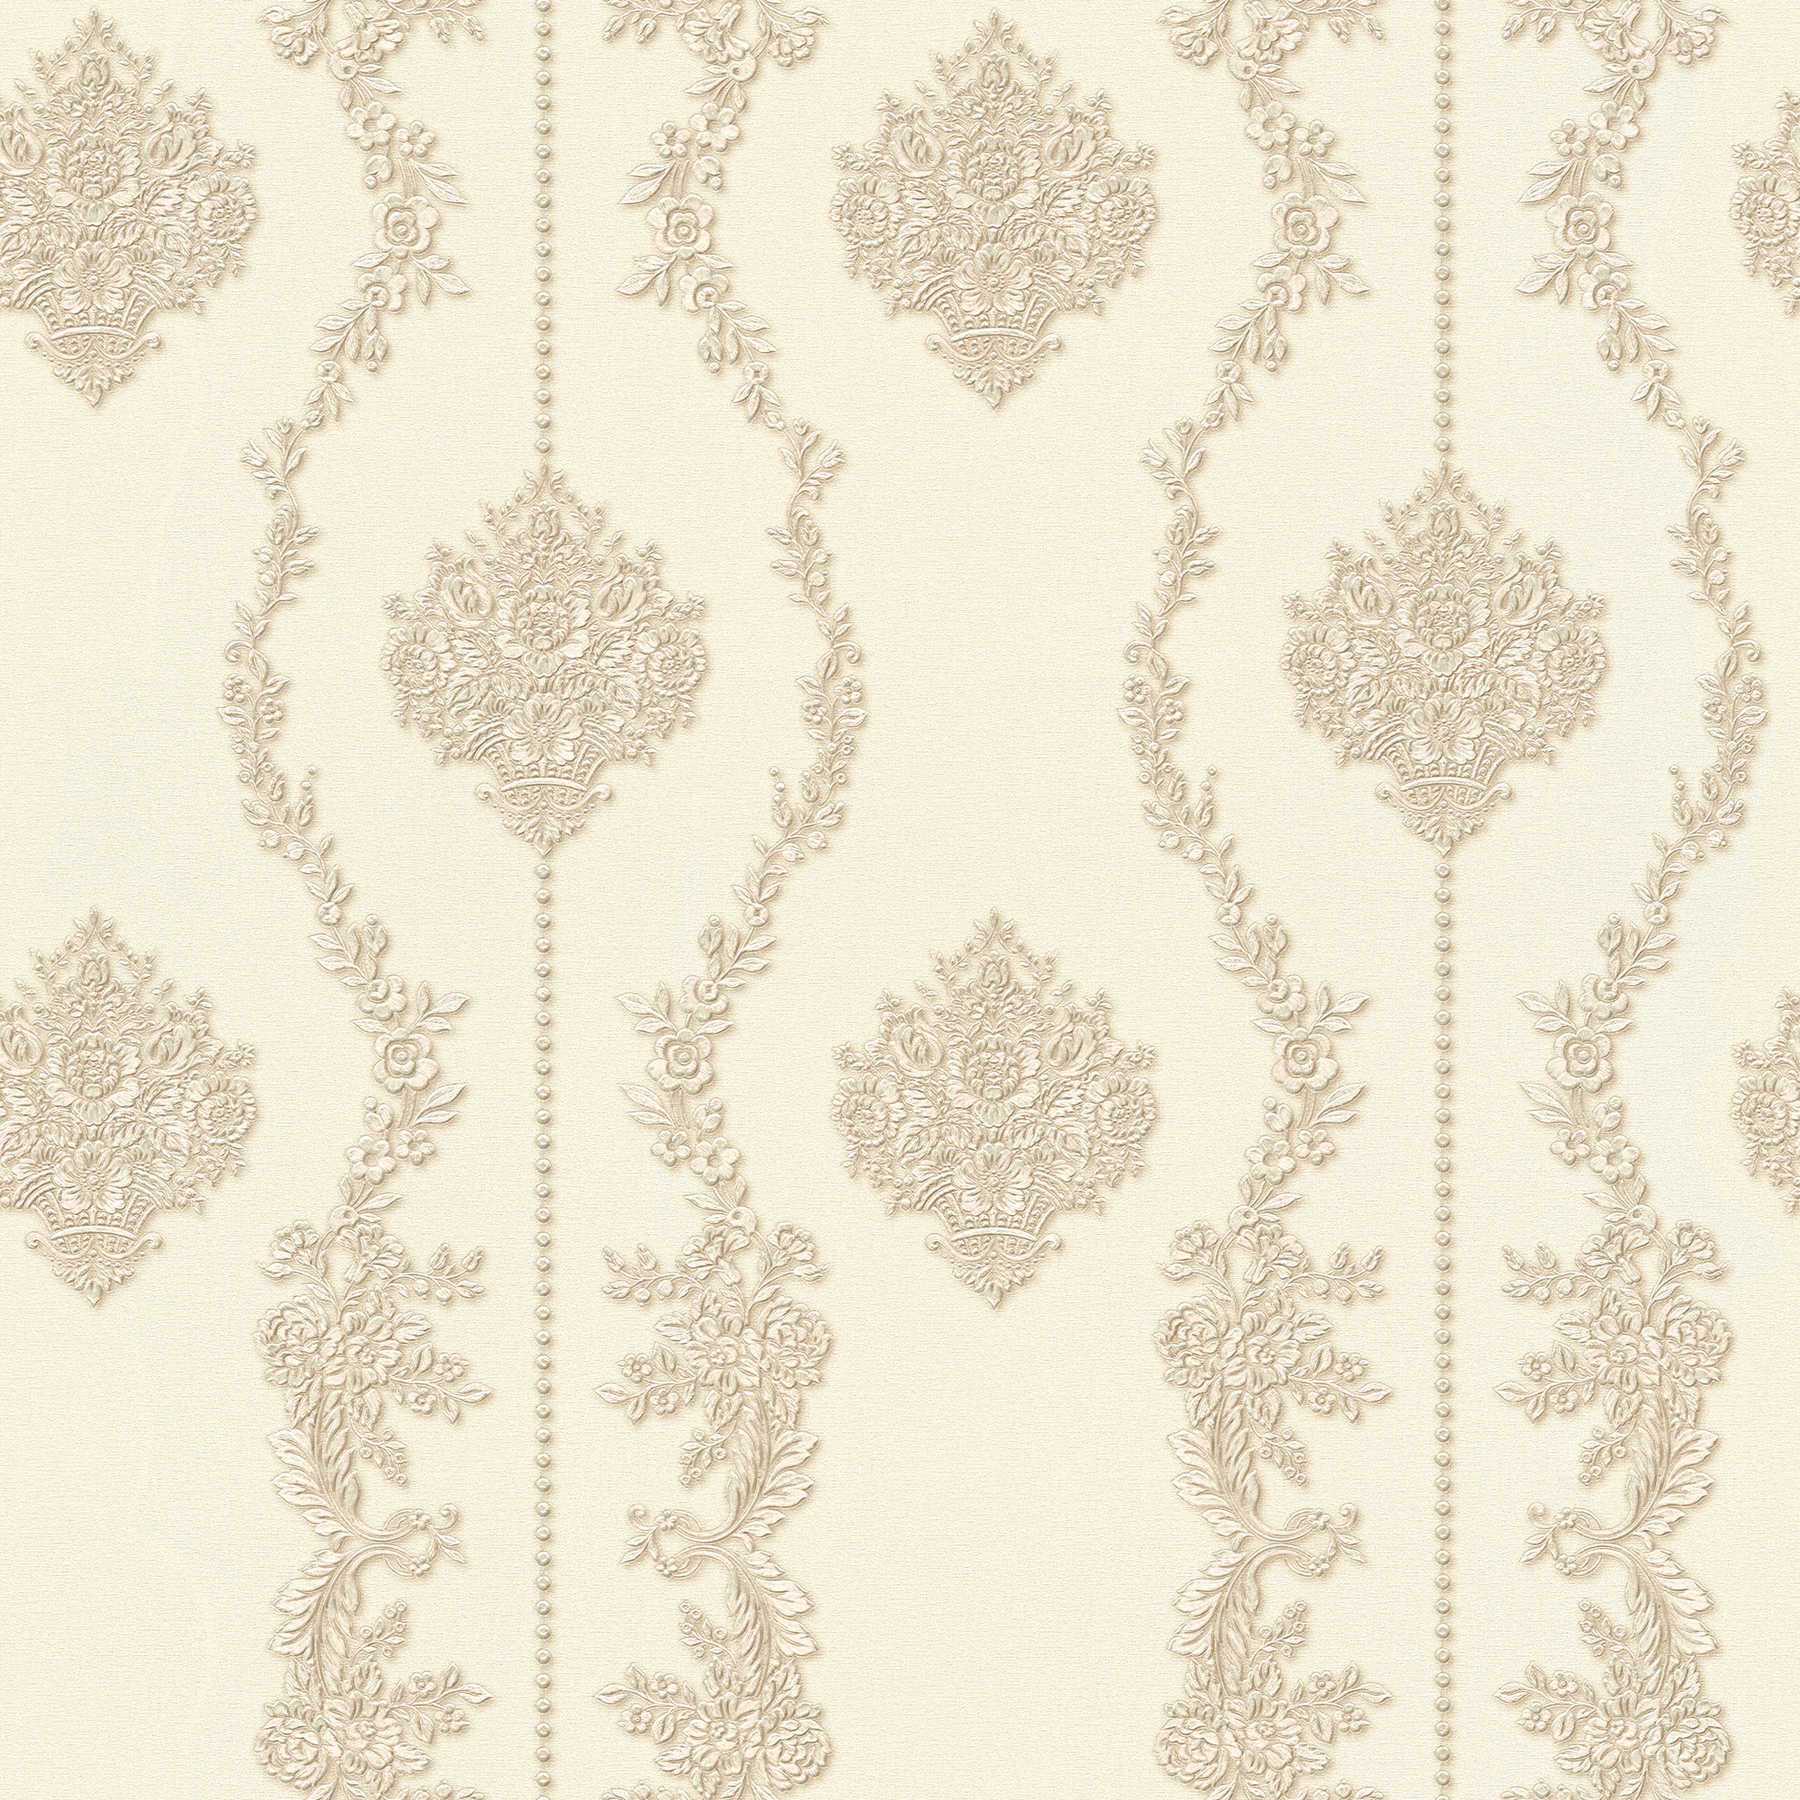 Opulent wallpaper with metallic decor & floral ornaments - beige
